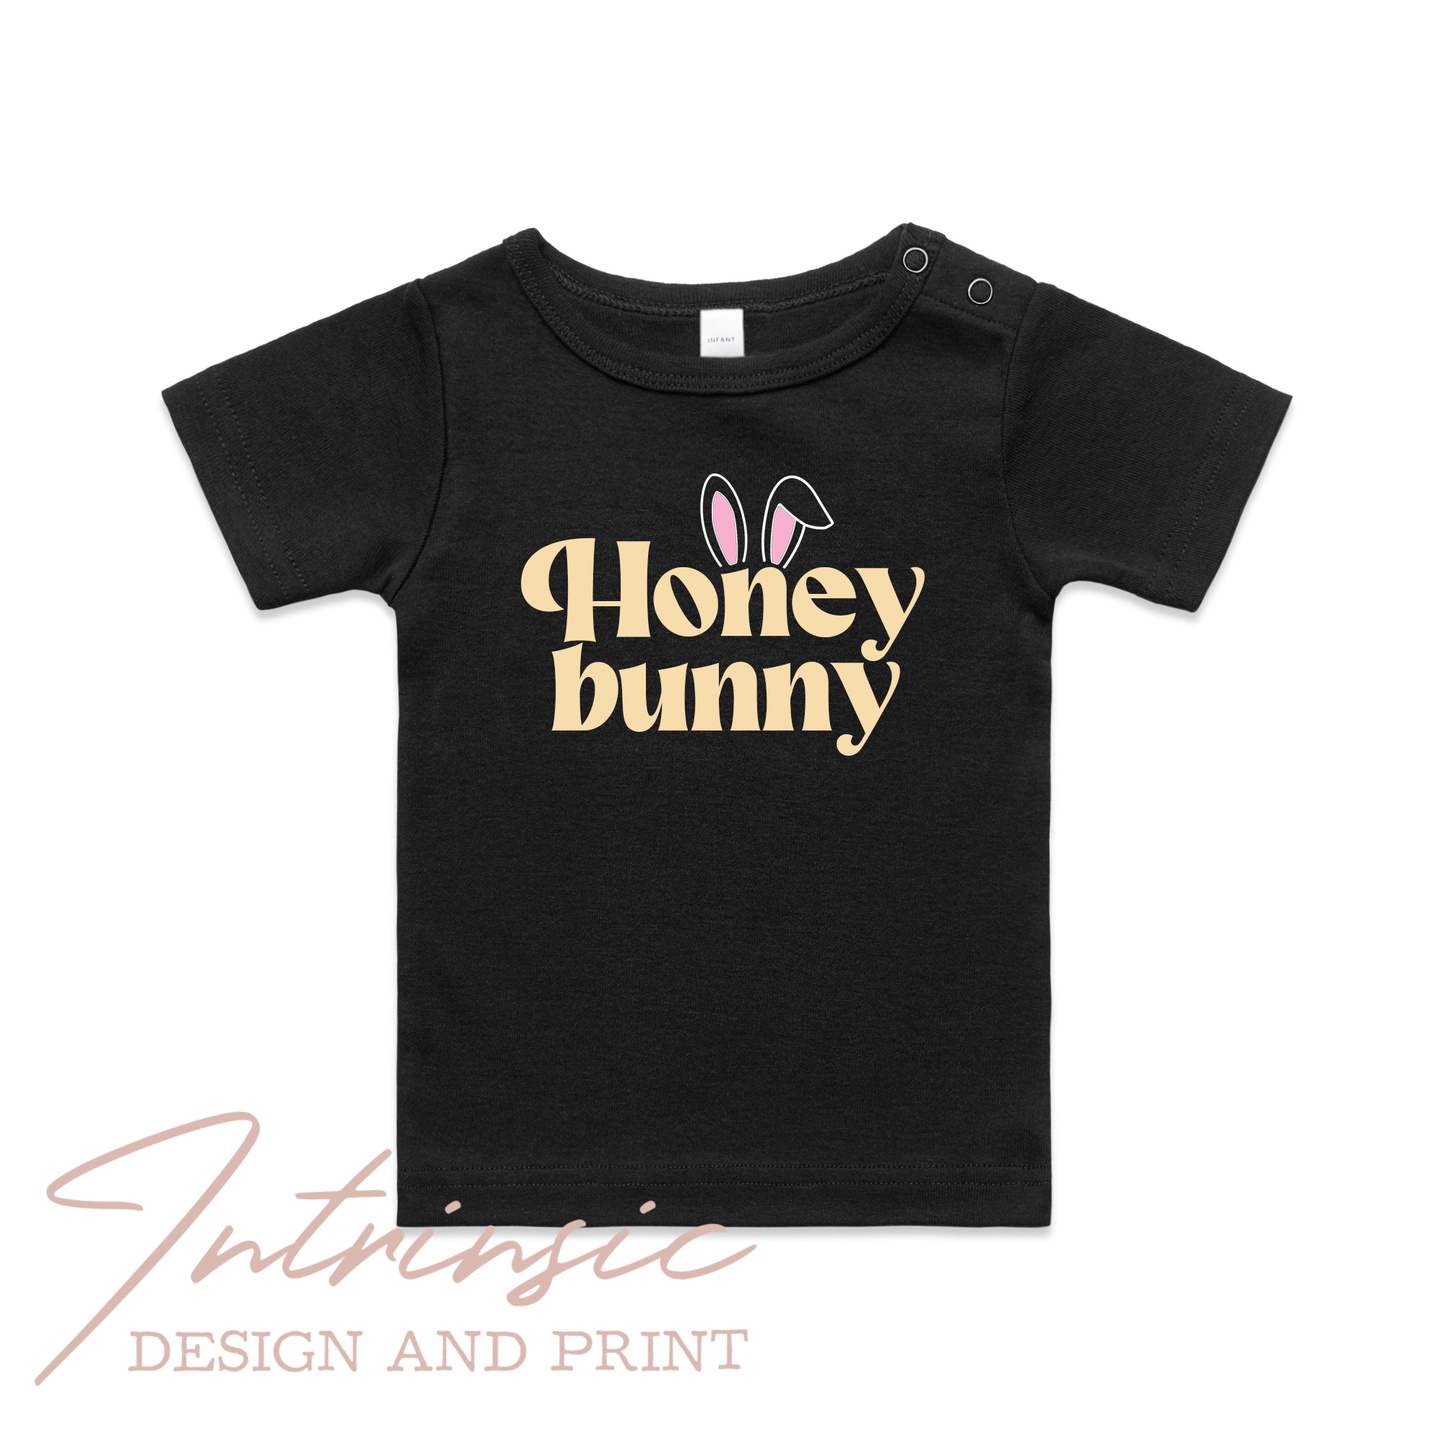 Retro Honey bunny - Infant